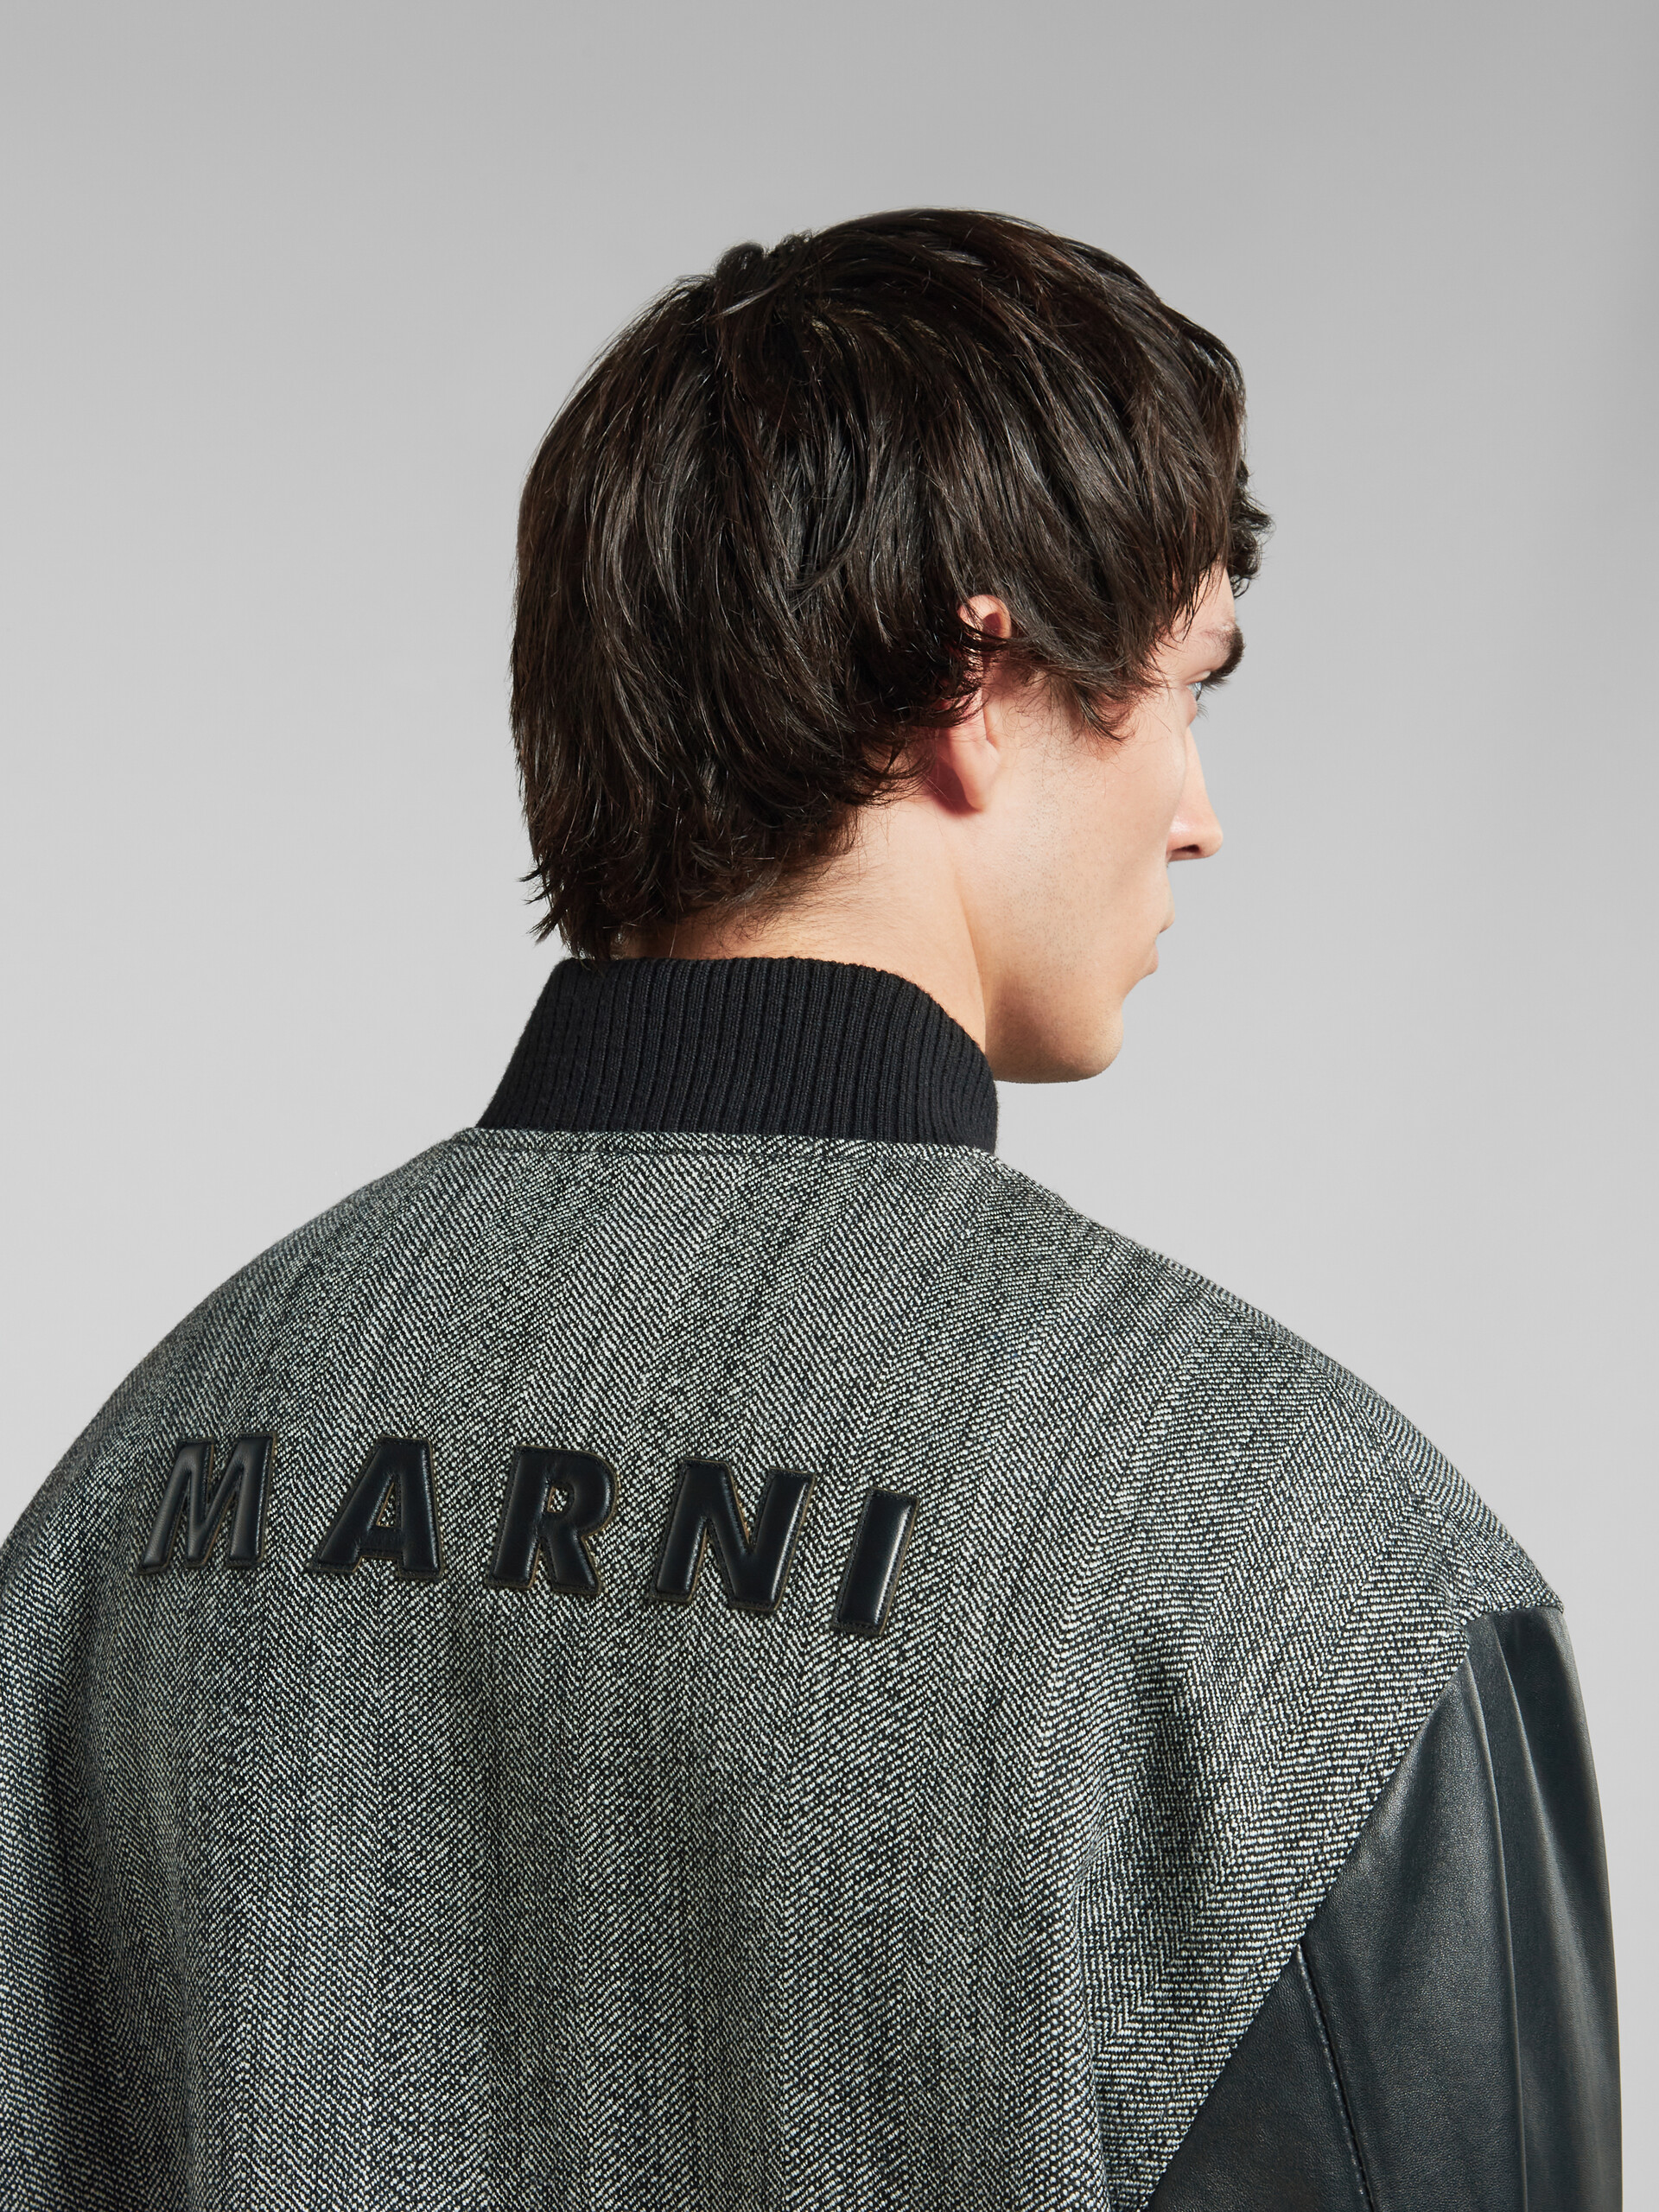 Black herringbone wool jacket with leather sleeves - Jackets - Image 5